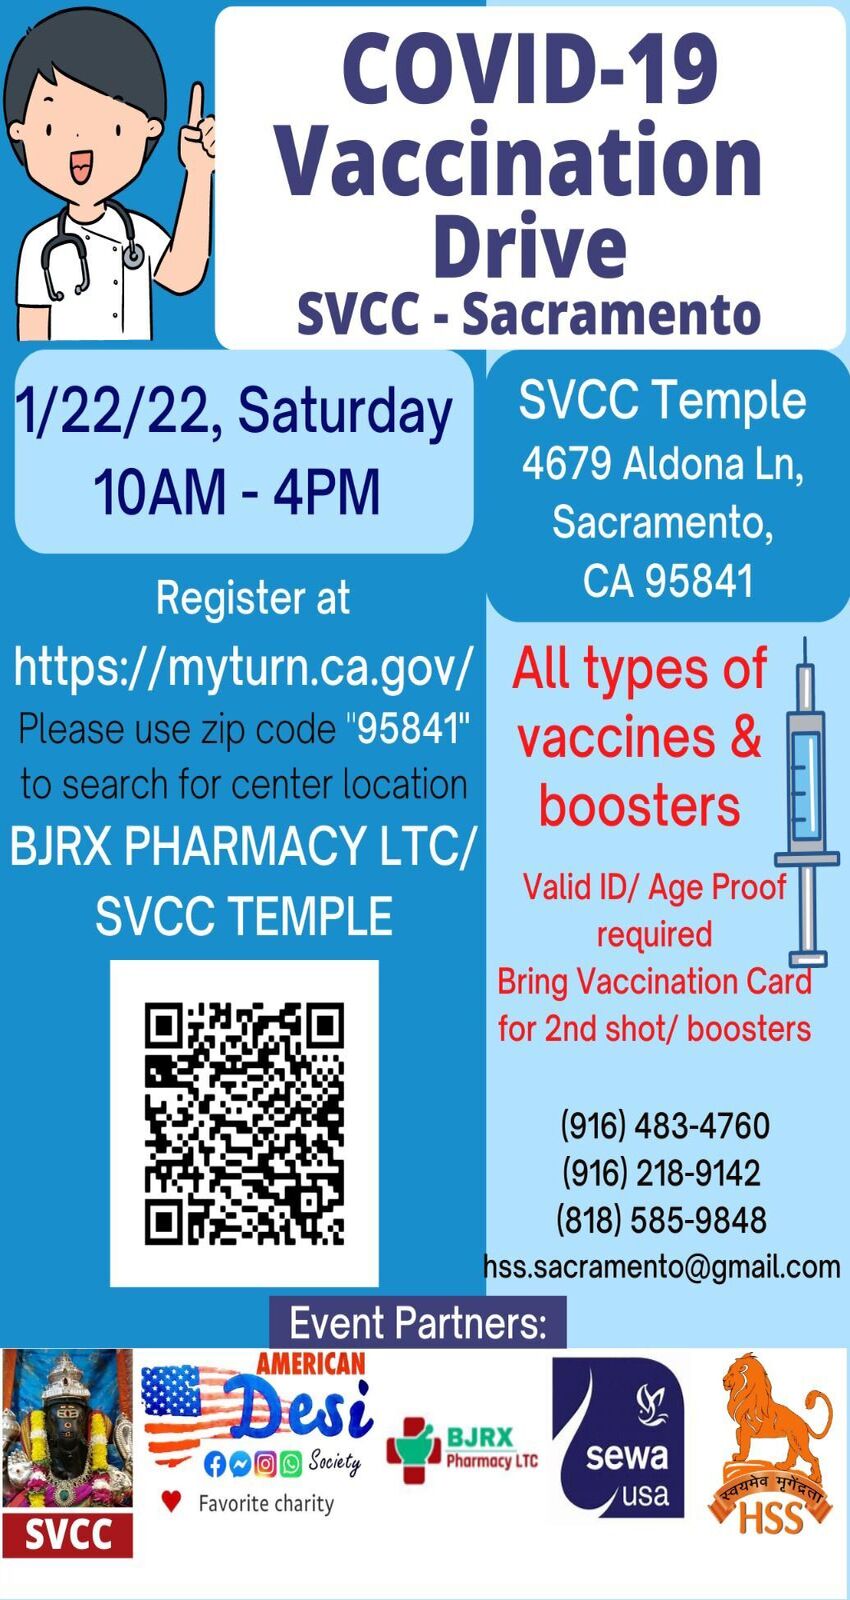 Covid-19 Vaccination Drive Sat Jan 22 1/22 10am-4pm SVCC Temple Sacramento